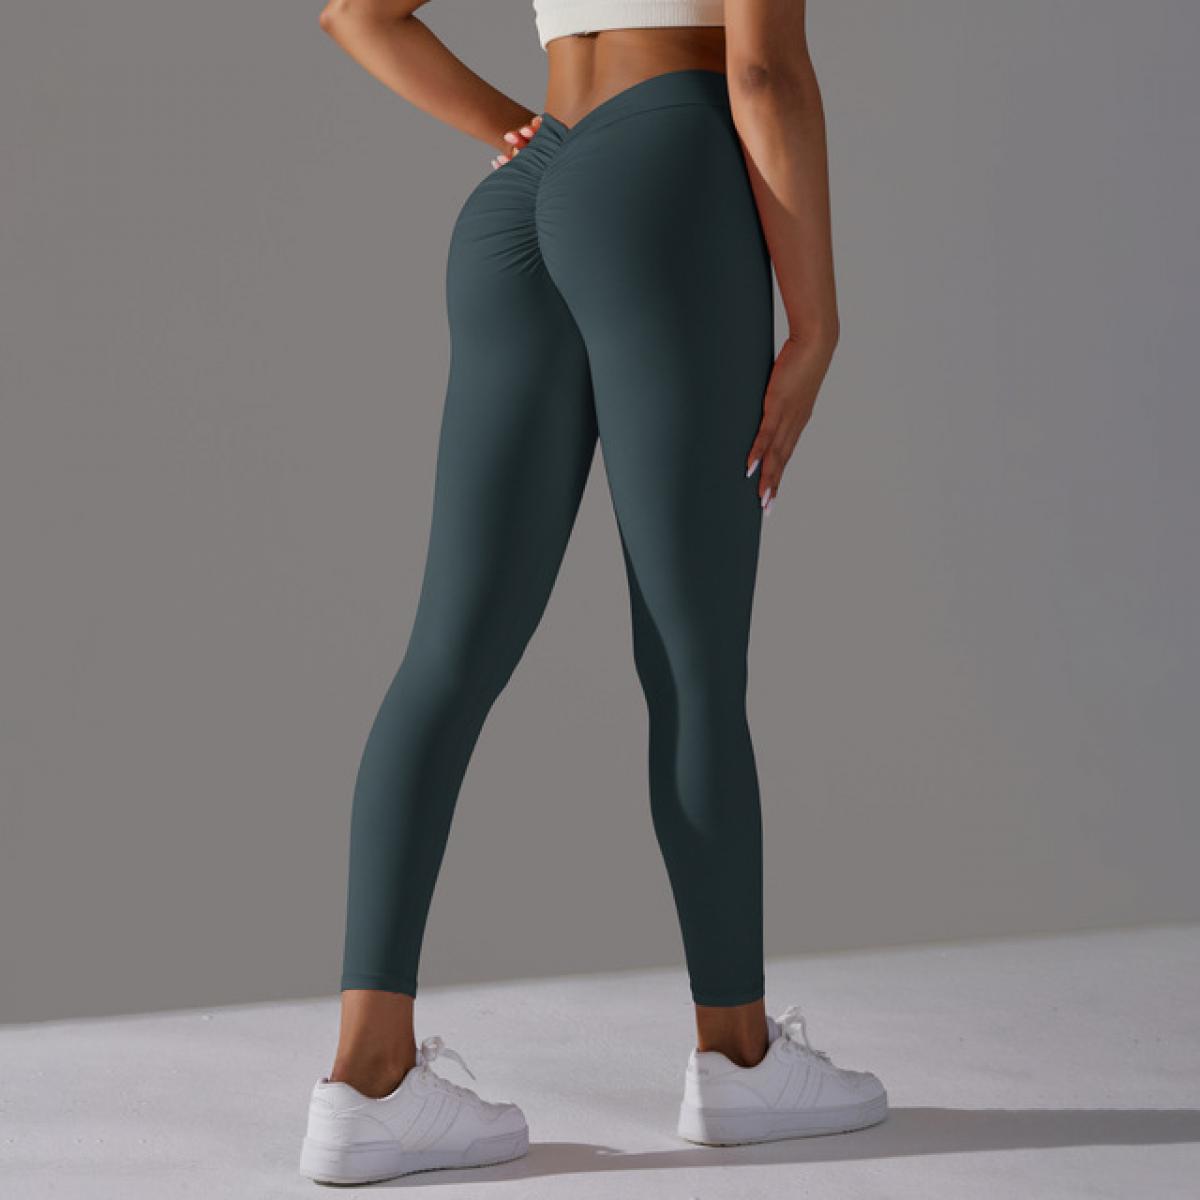 Back V Butt Yoga Pants Women High Waist Fitness Workout Gym